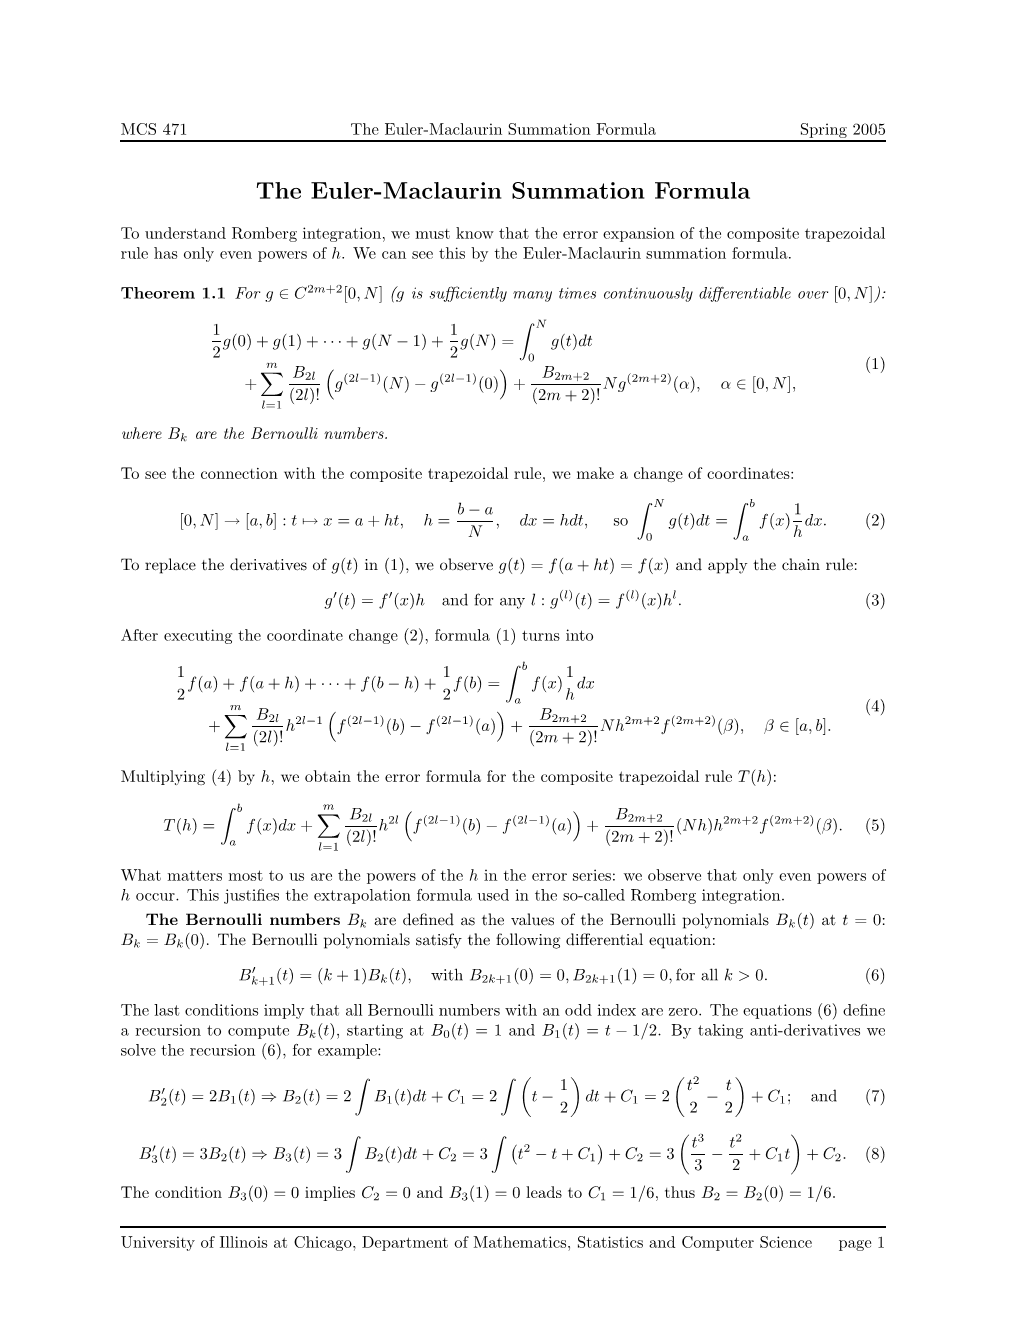 The Euler-Maclaurin Summation Formula Spring 2005